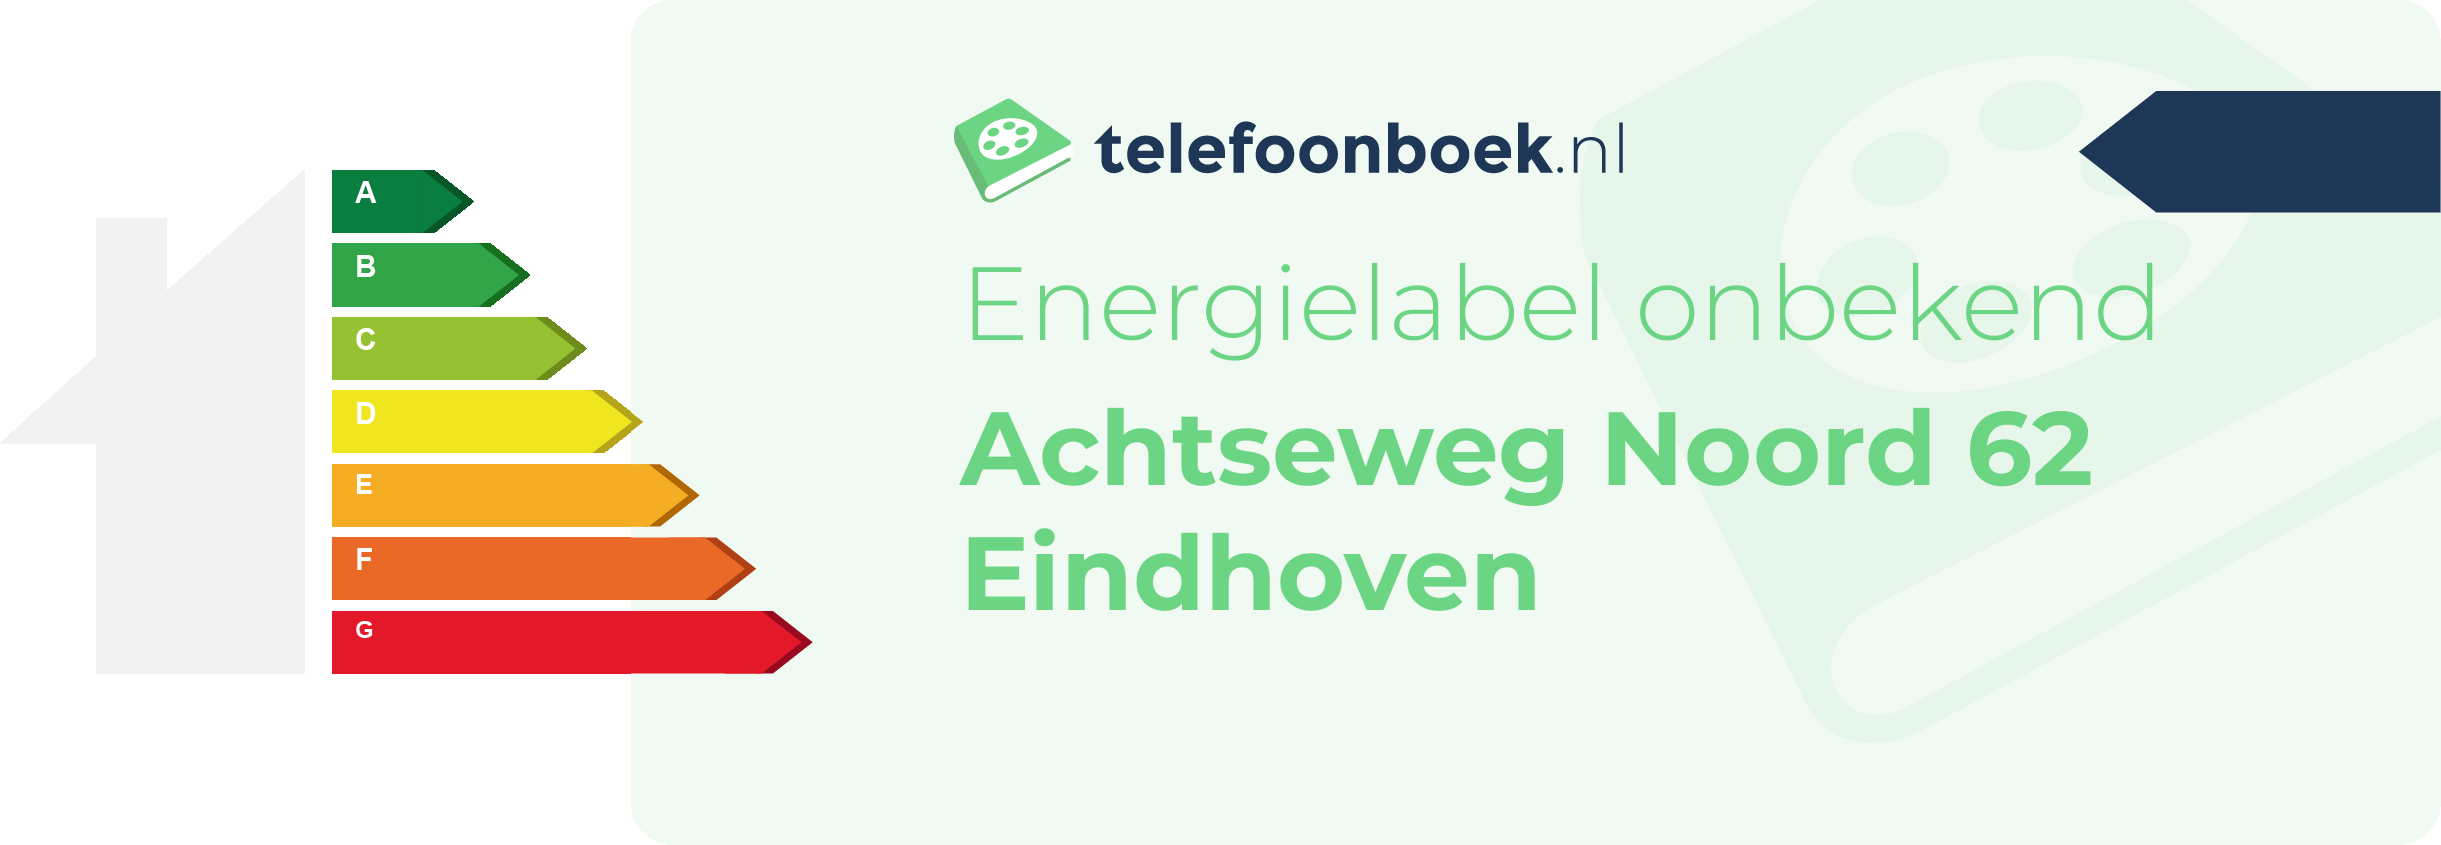 Energielabel Achtseweg Noord 62 Eindhoven